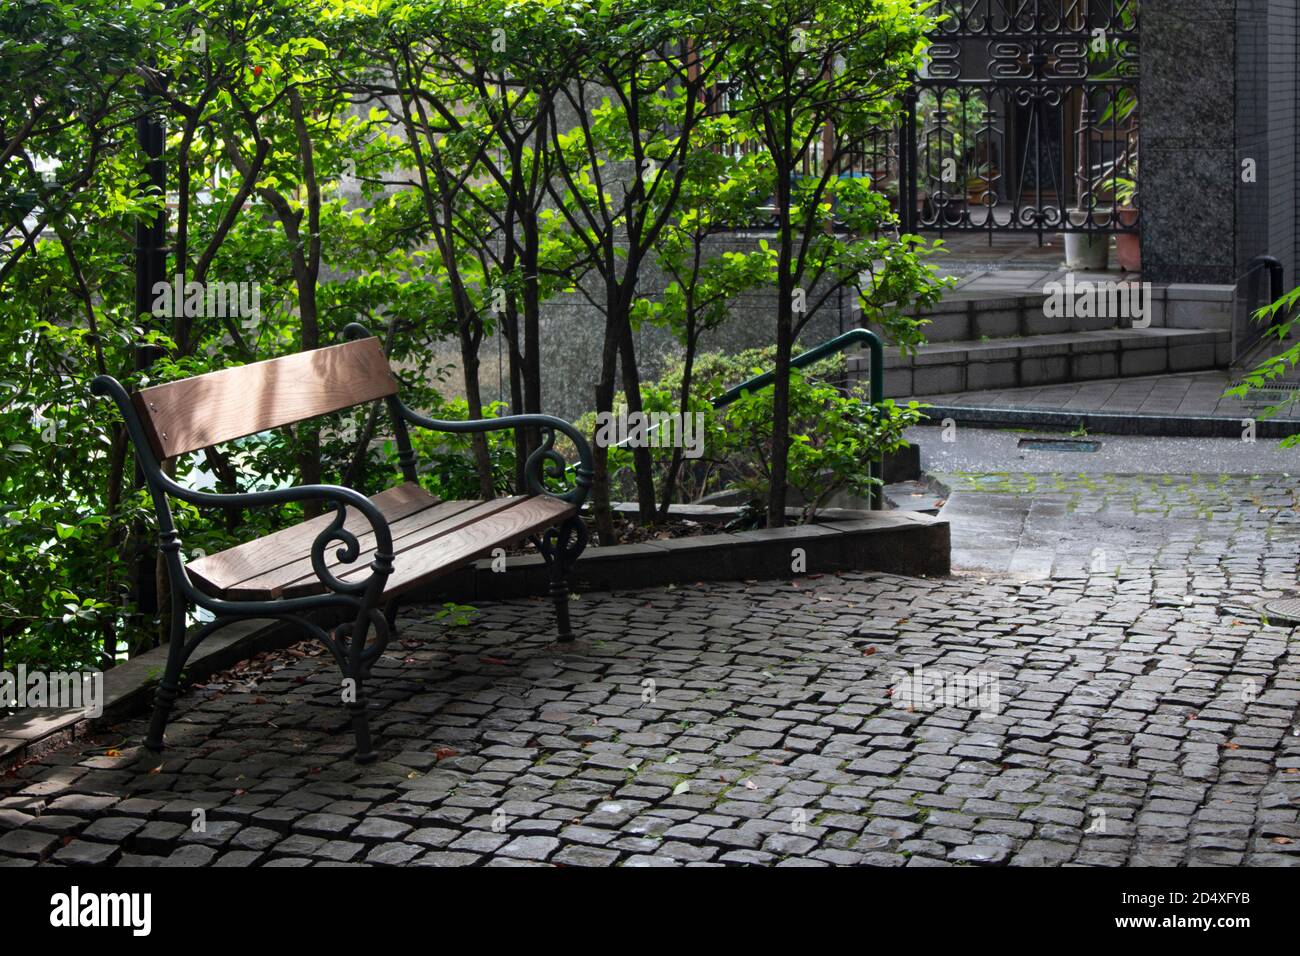 European style cobblestone courtyard with antique benches Stock Photo